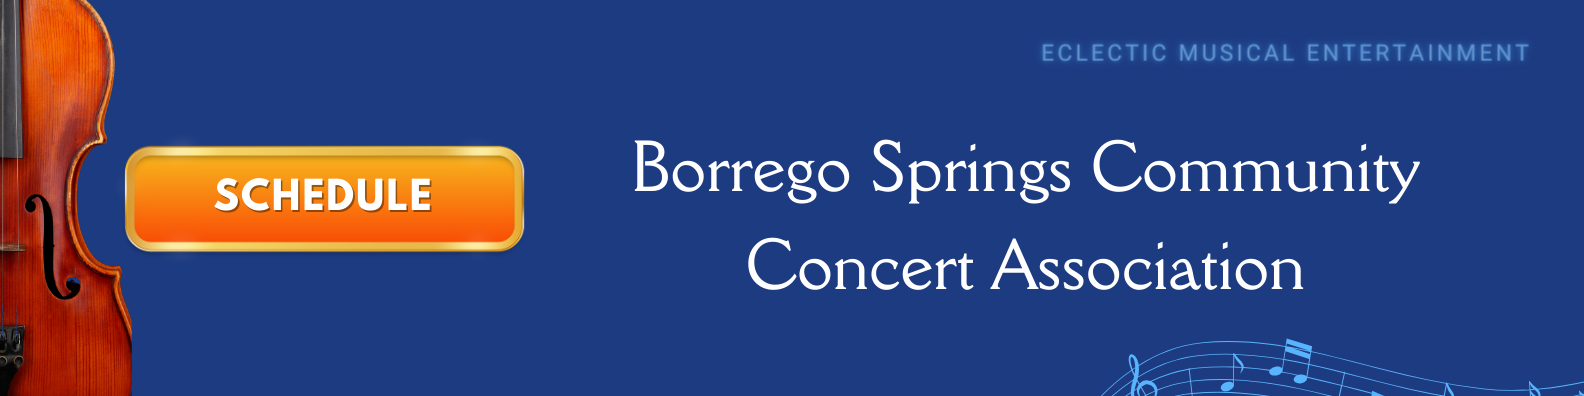 Borrego Springs Concert Association Schedule